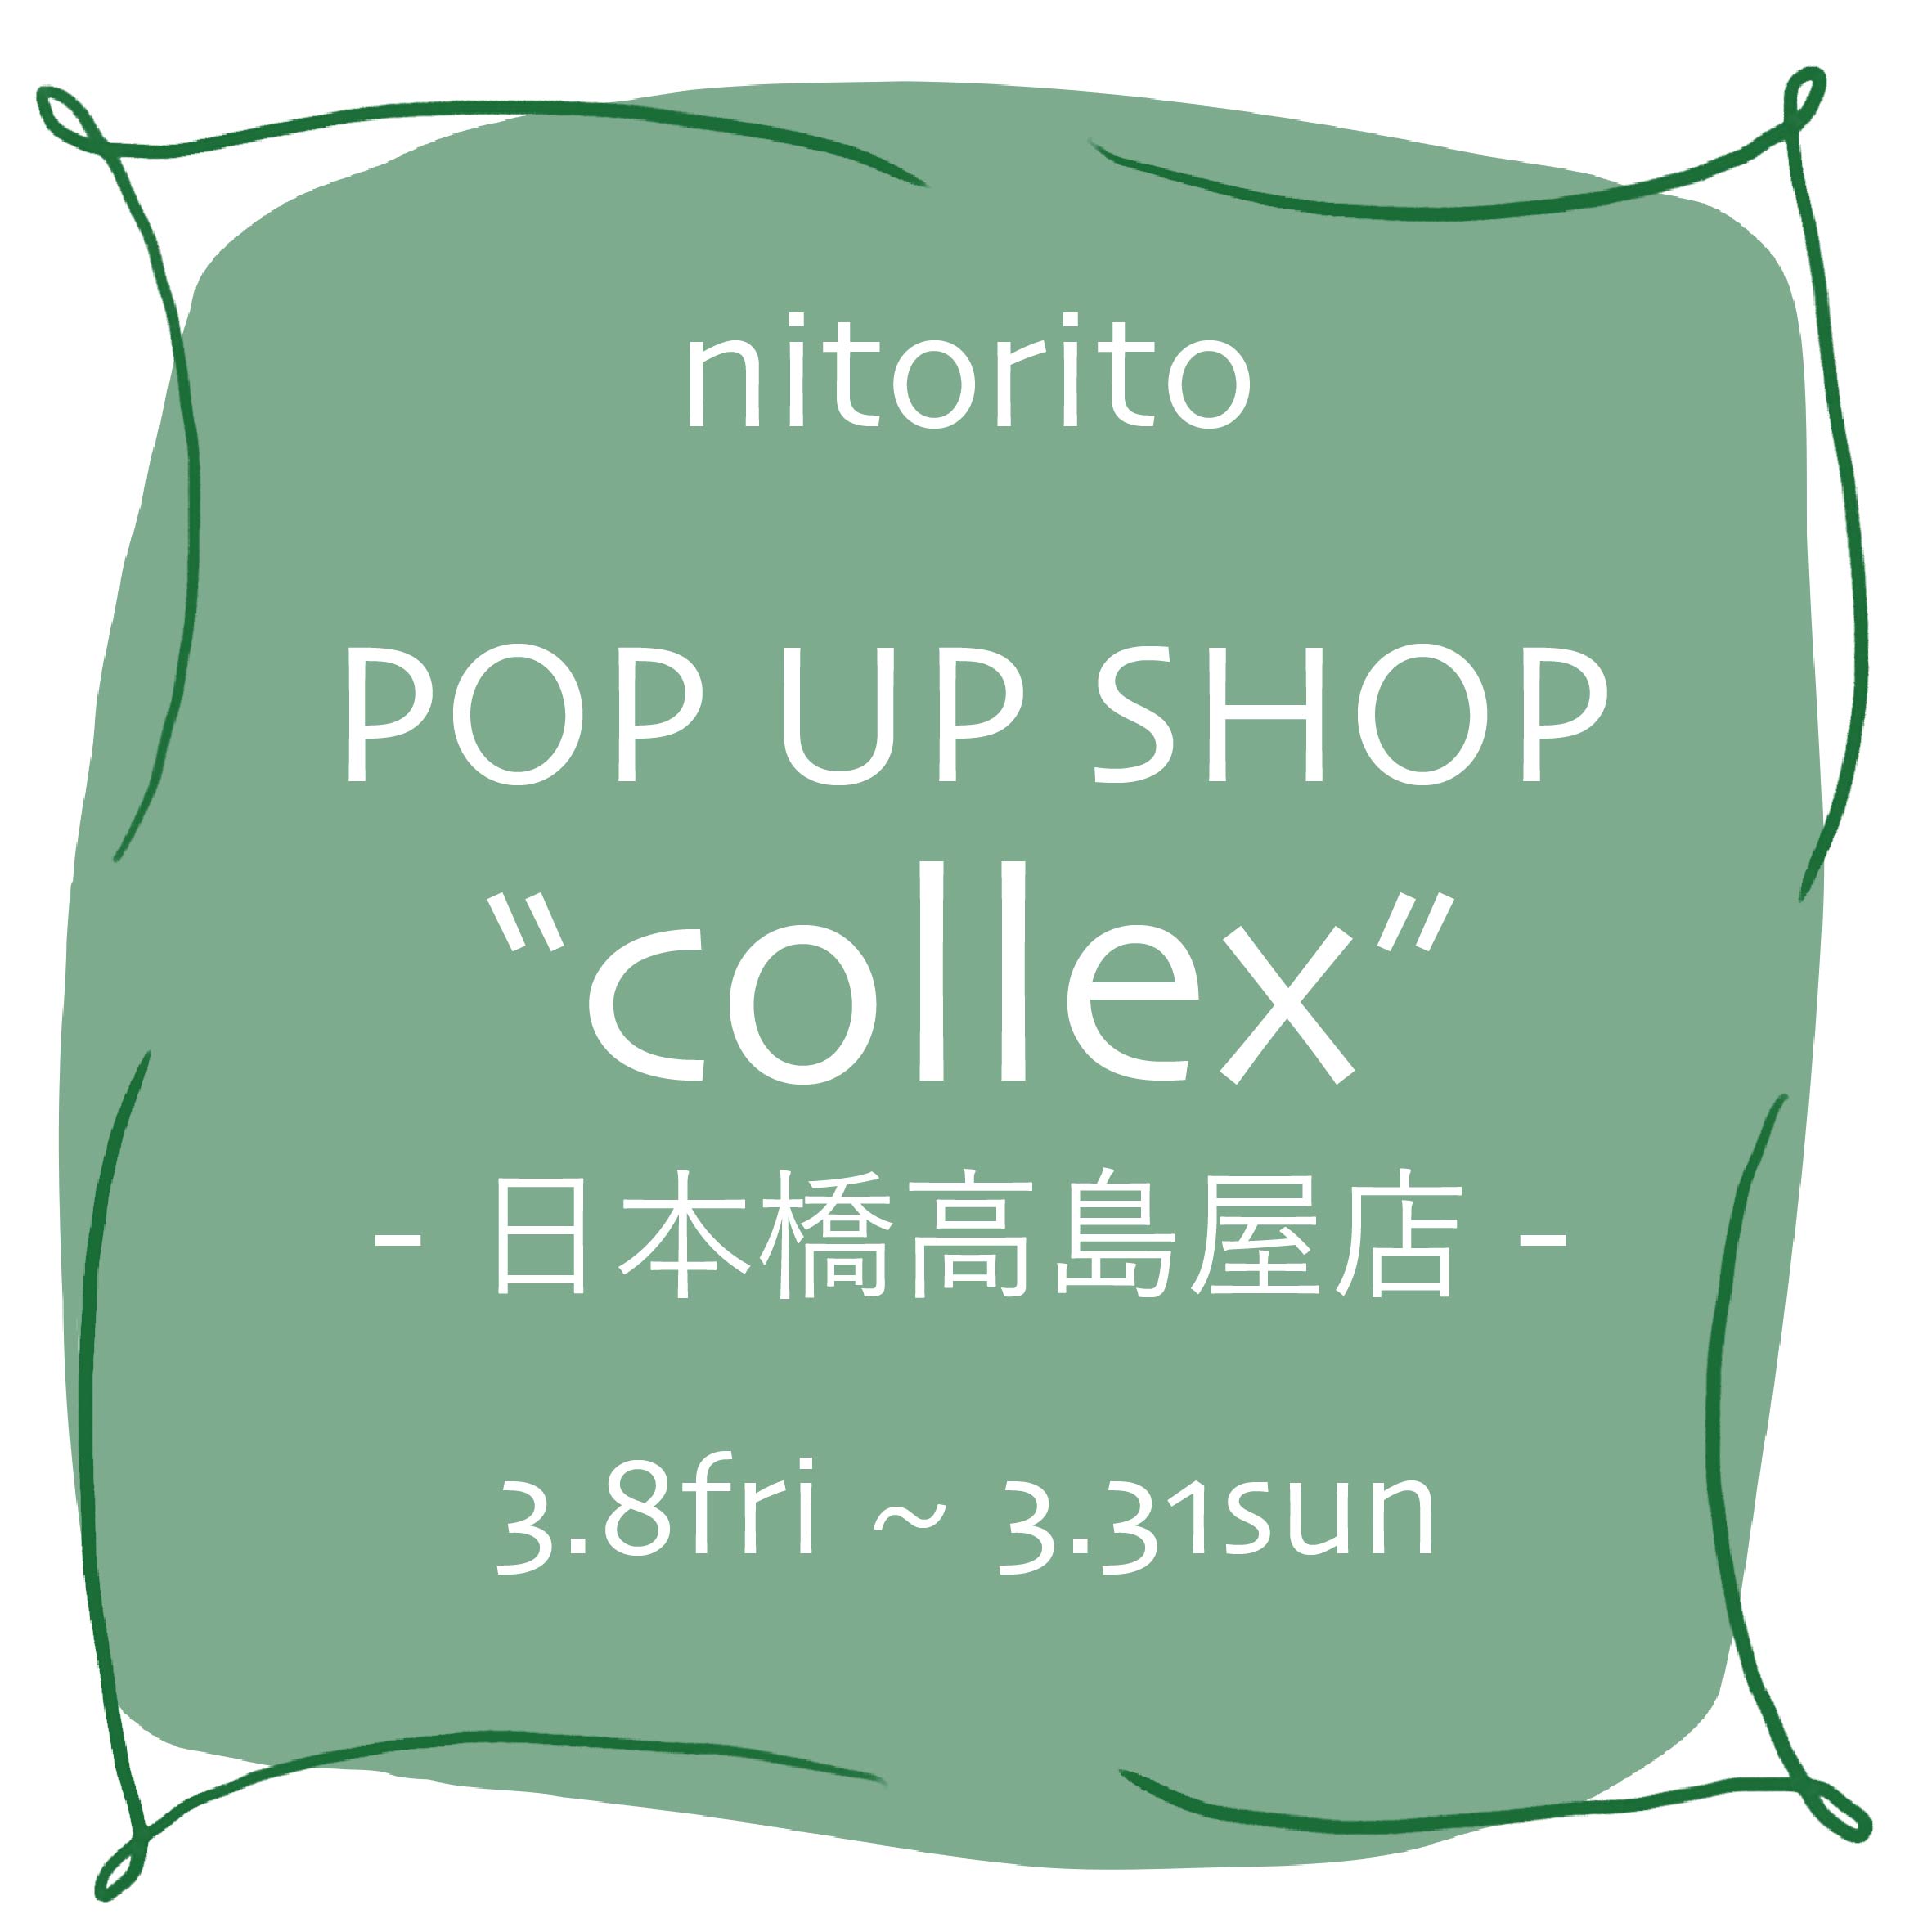 collex日本橋高島屋店にてPOPUPSHOP！